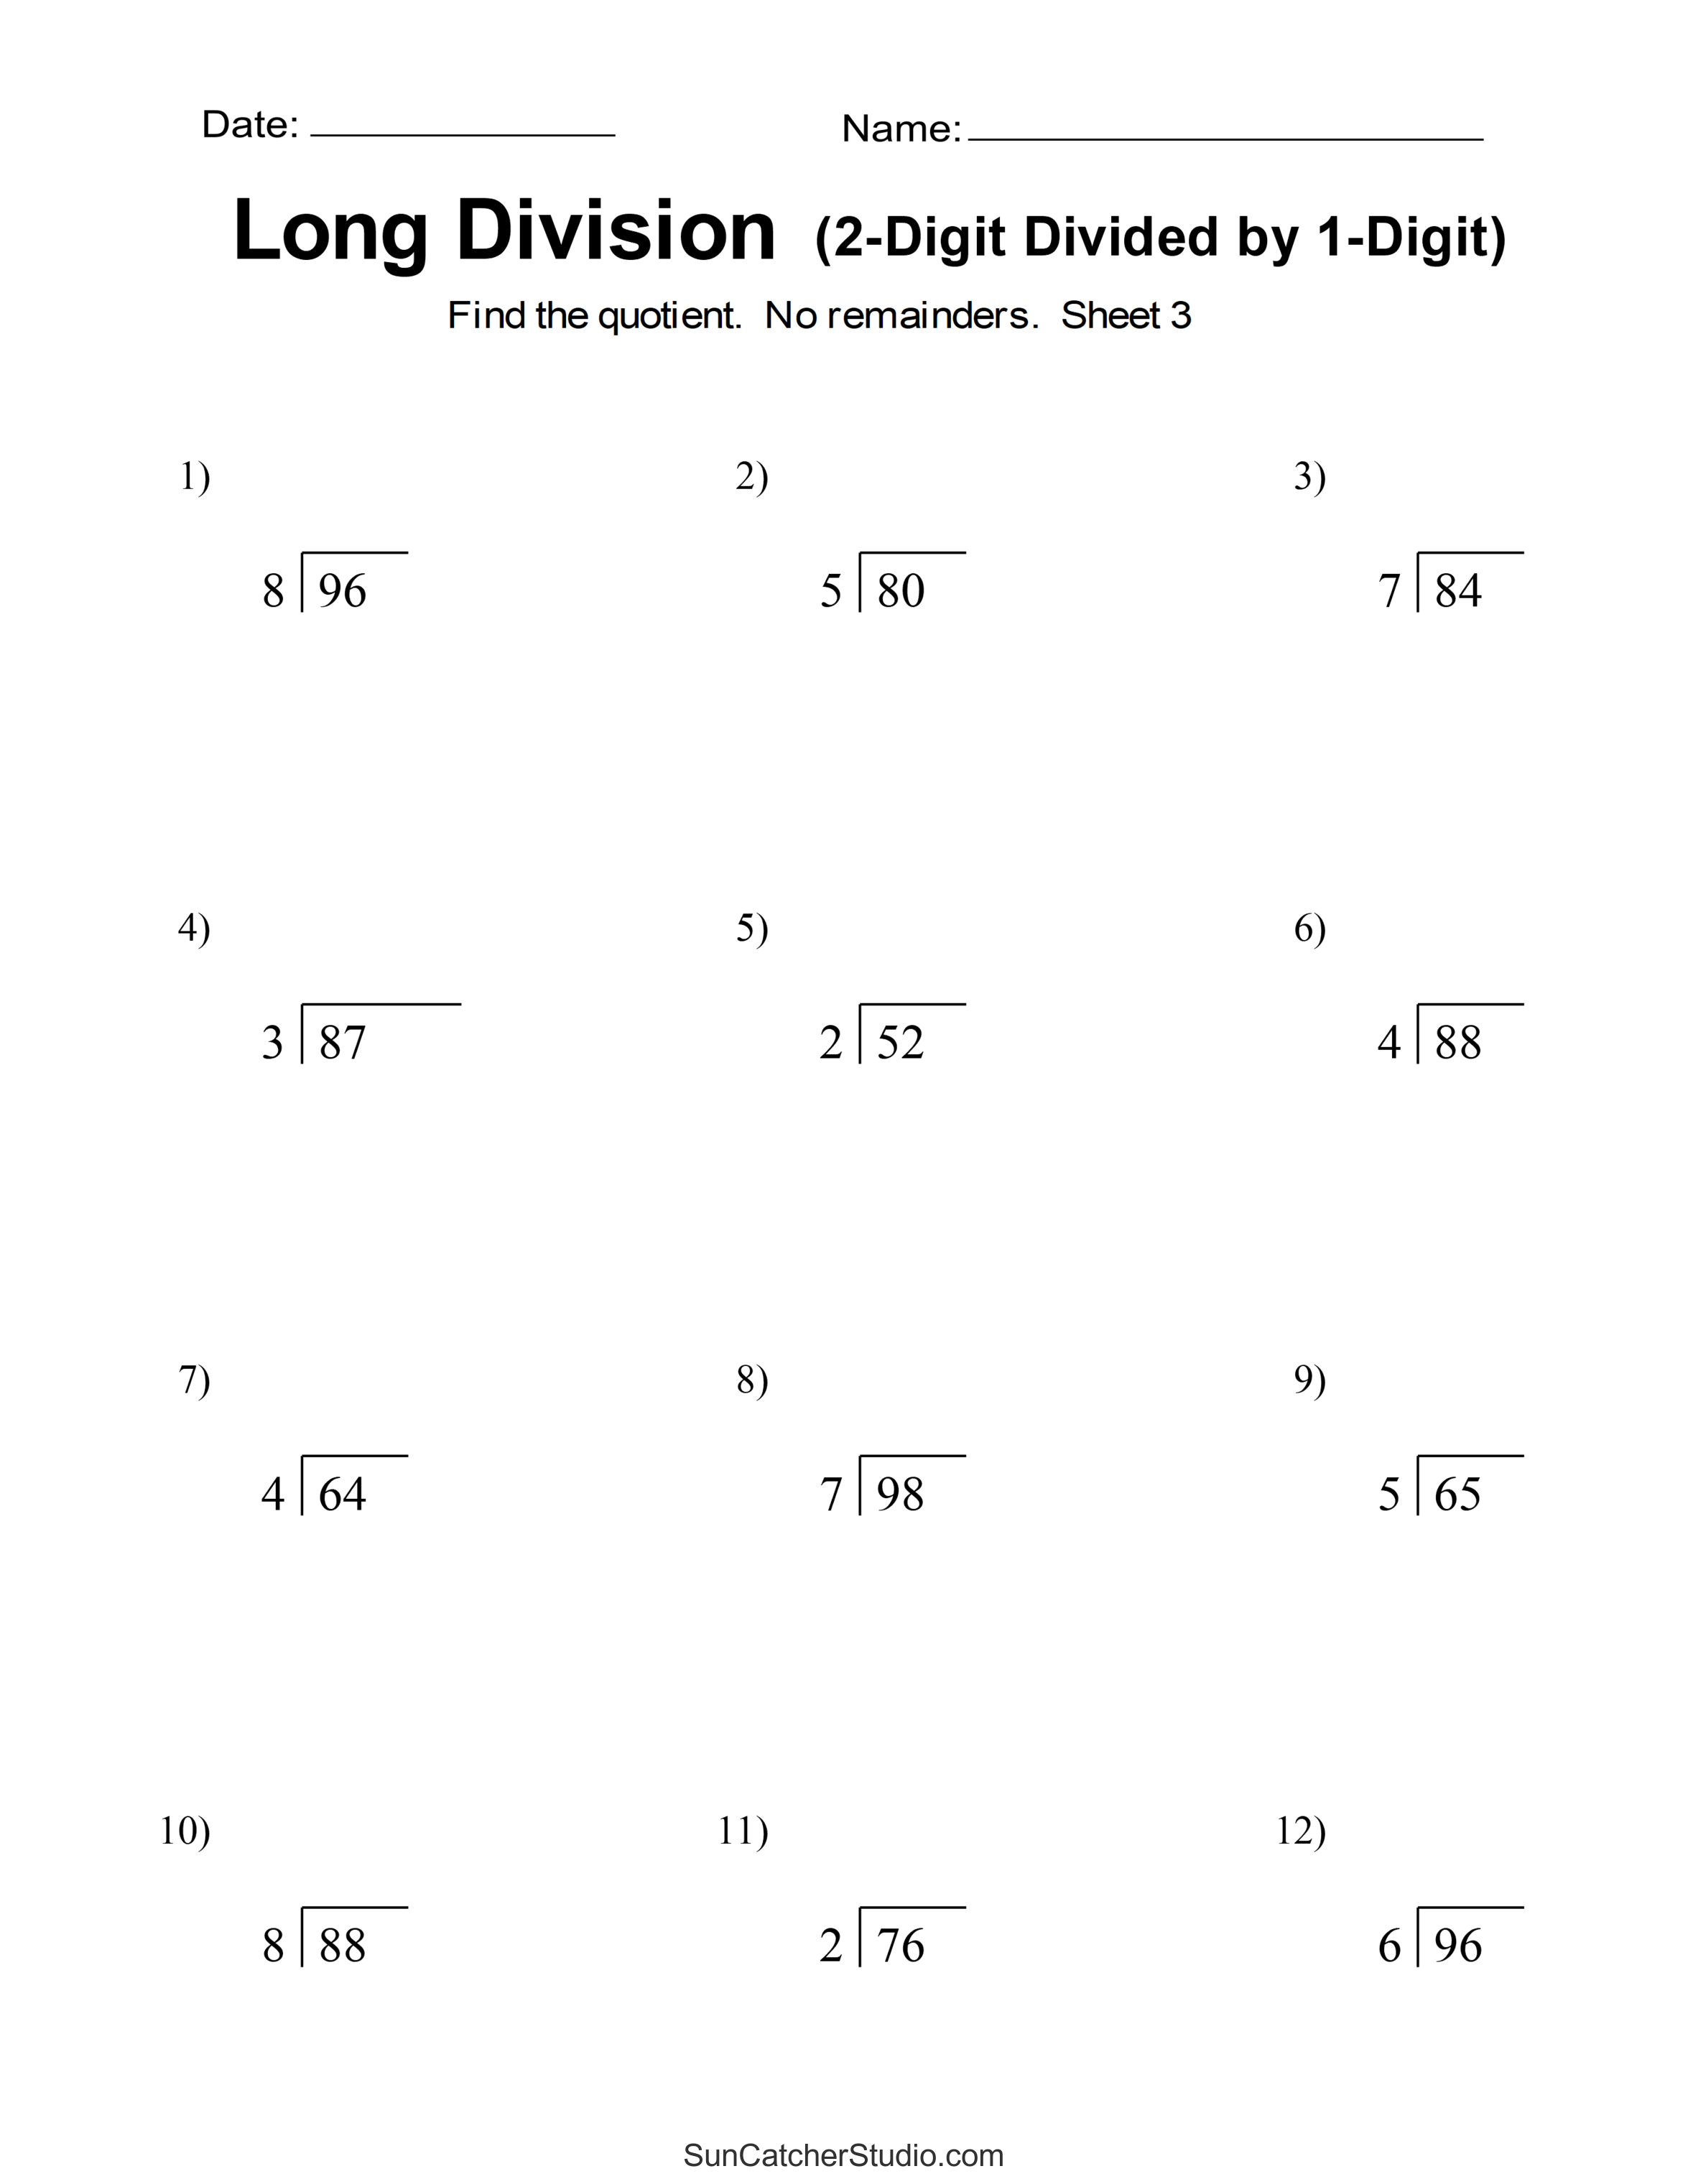 long-division-worksheets-problems-free-printable-math-drills-diy